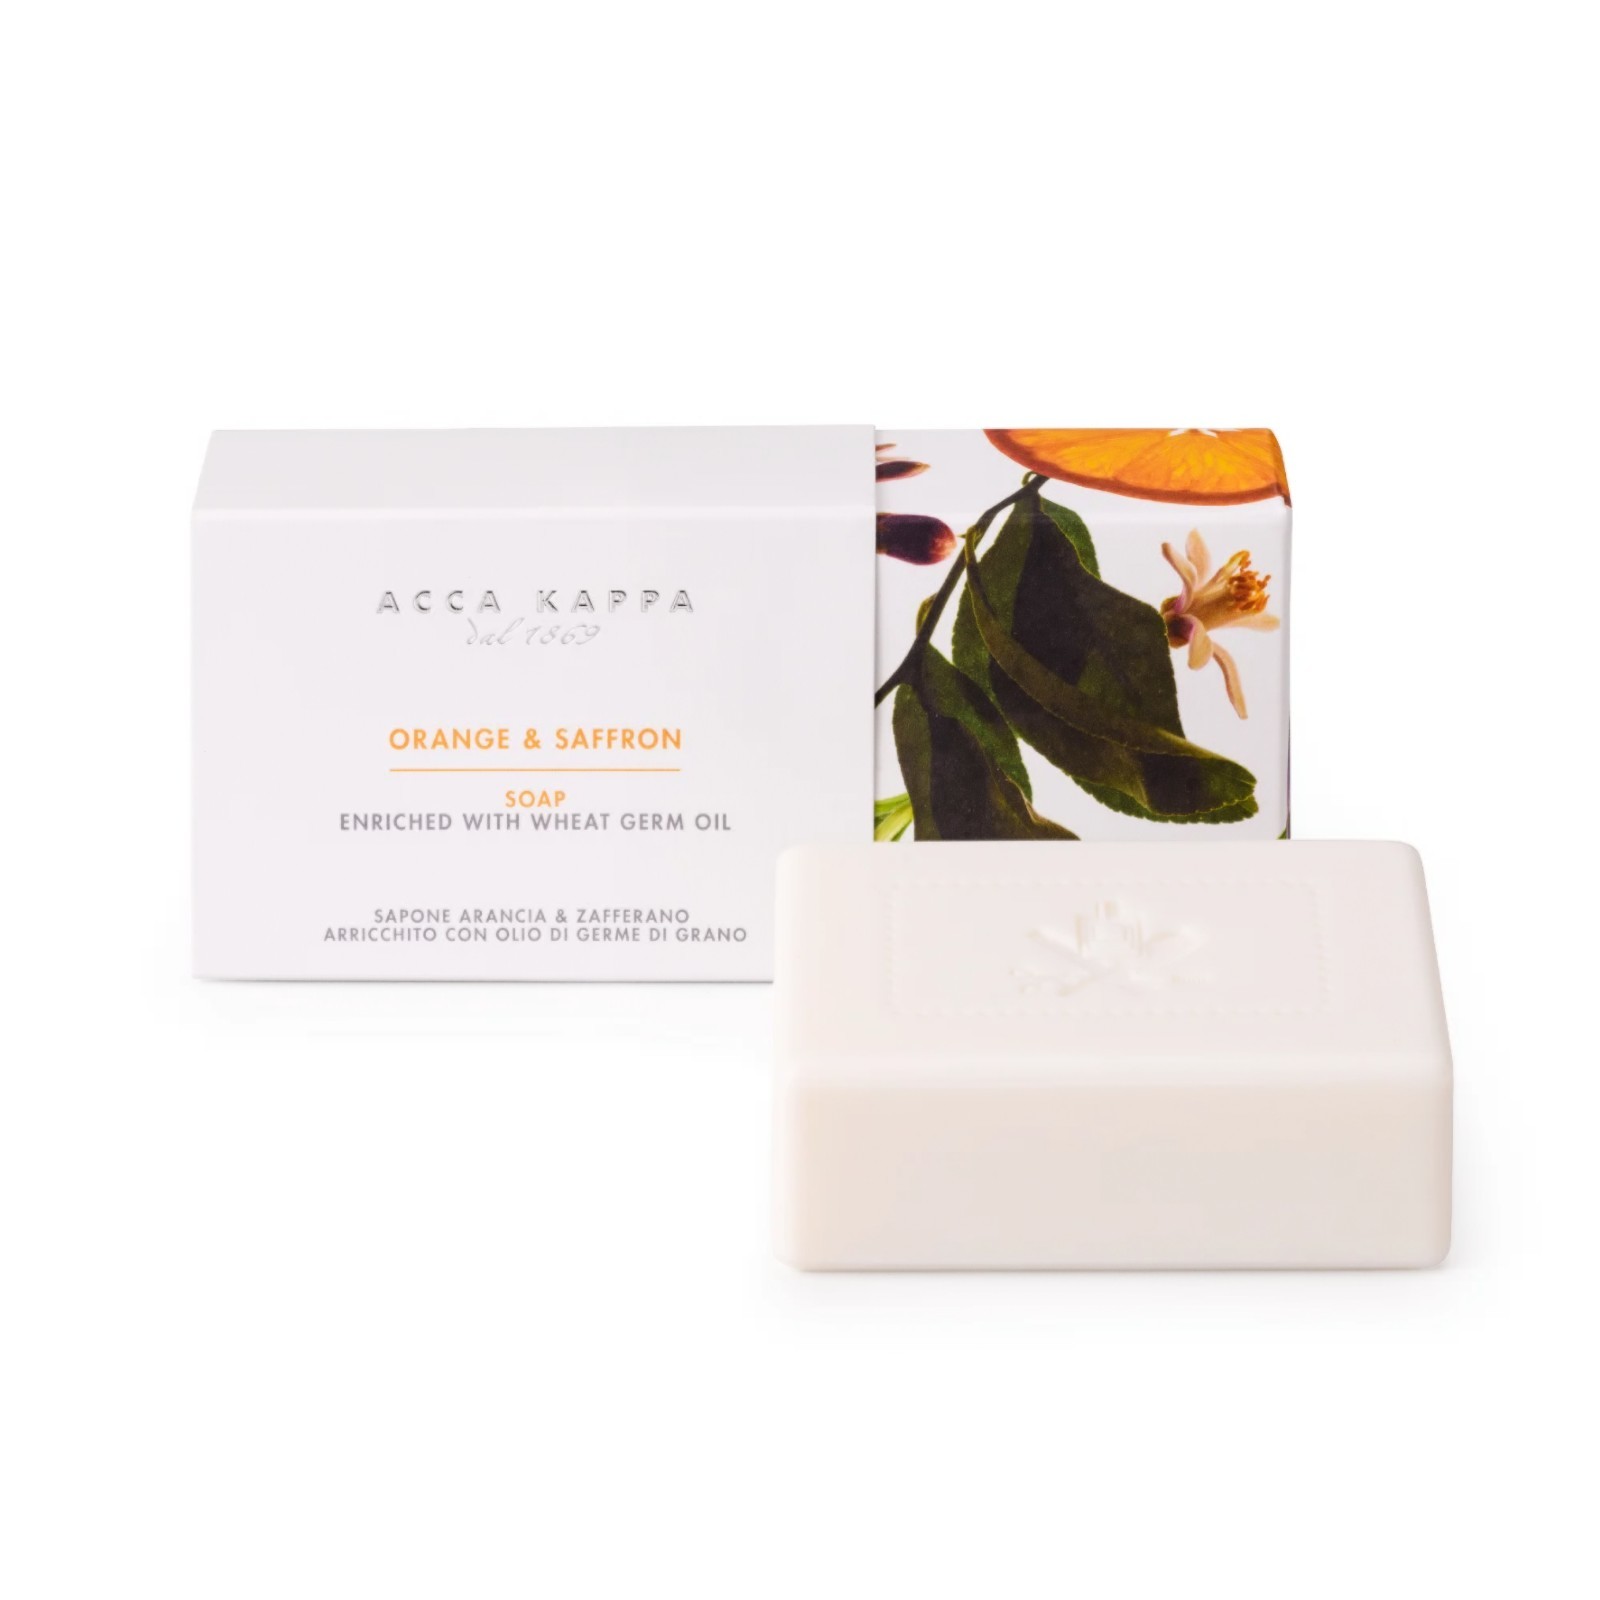 ACCA KAPPA Orange & Saffron Soap - 150g